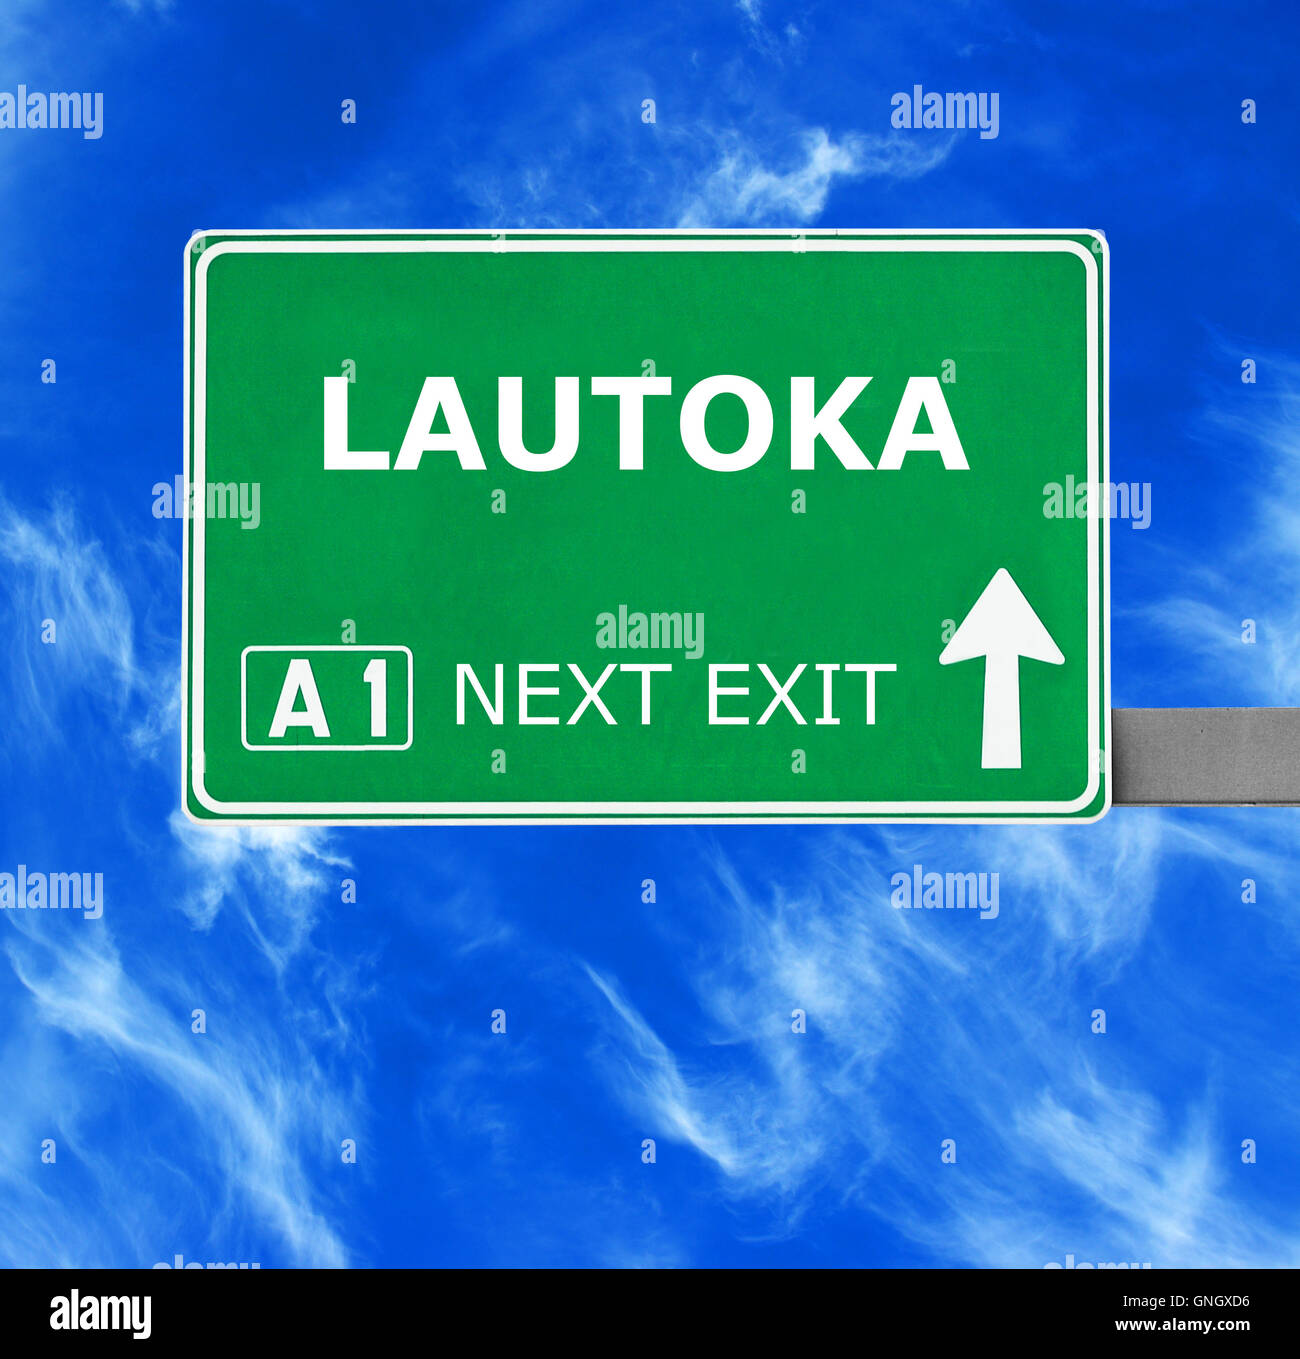 LAUTOKA road sign against clear blue sky Stock Photo